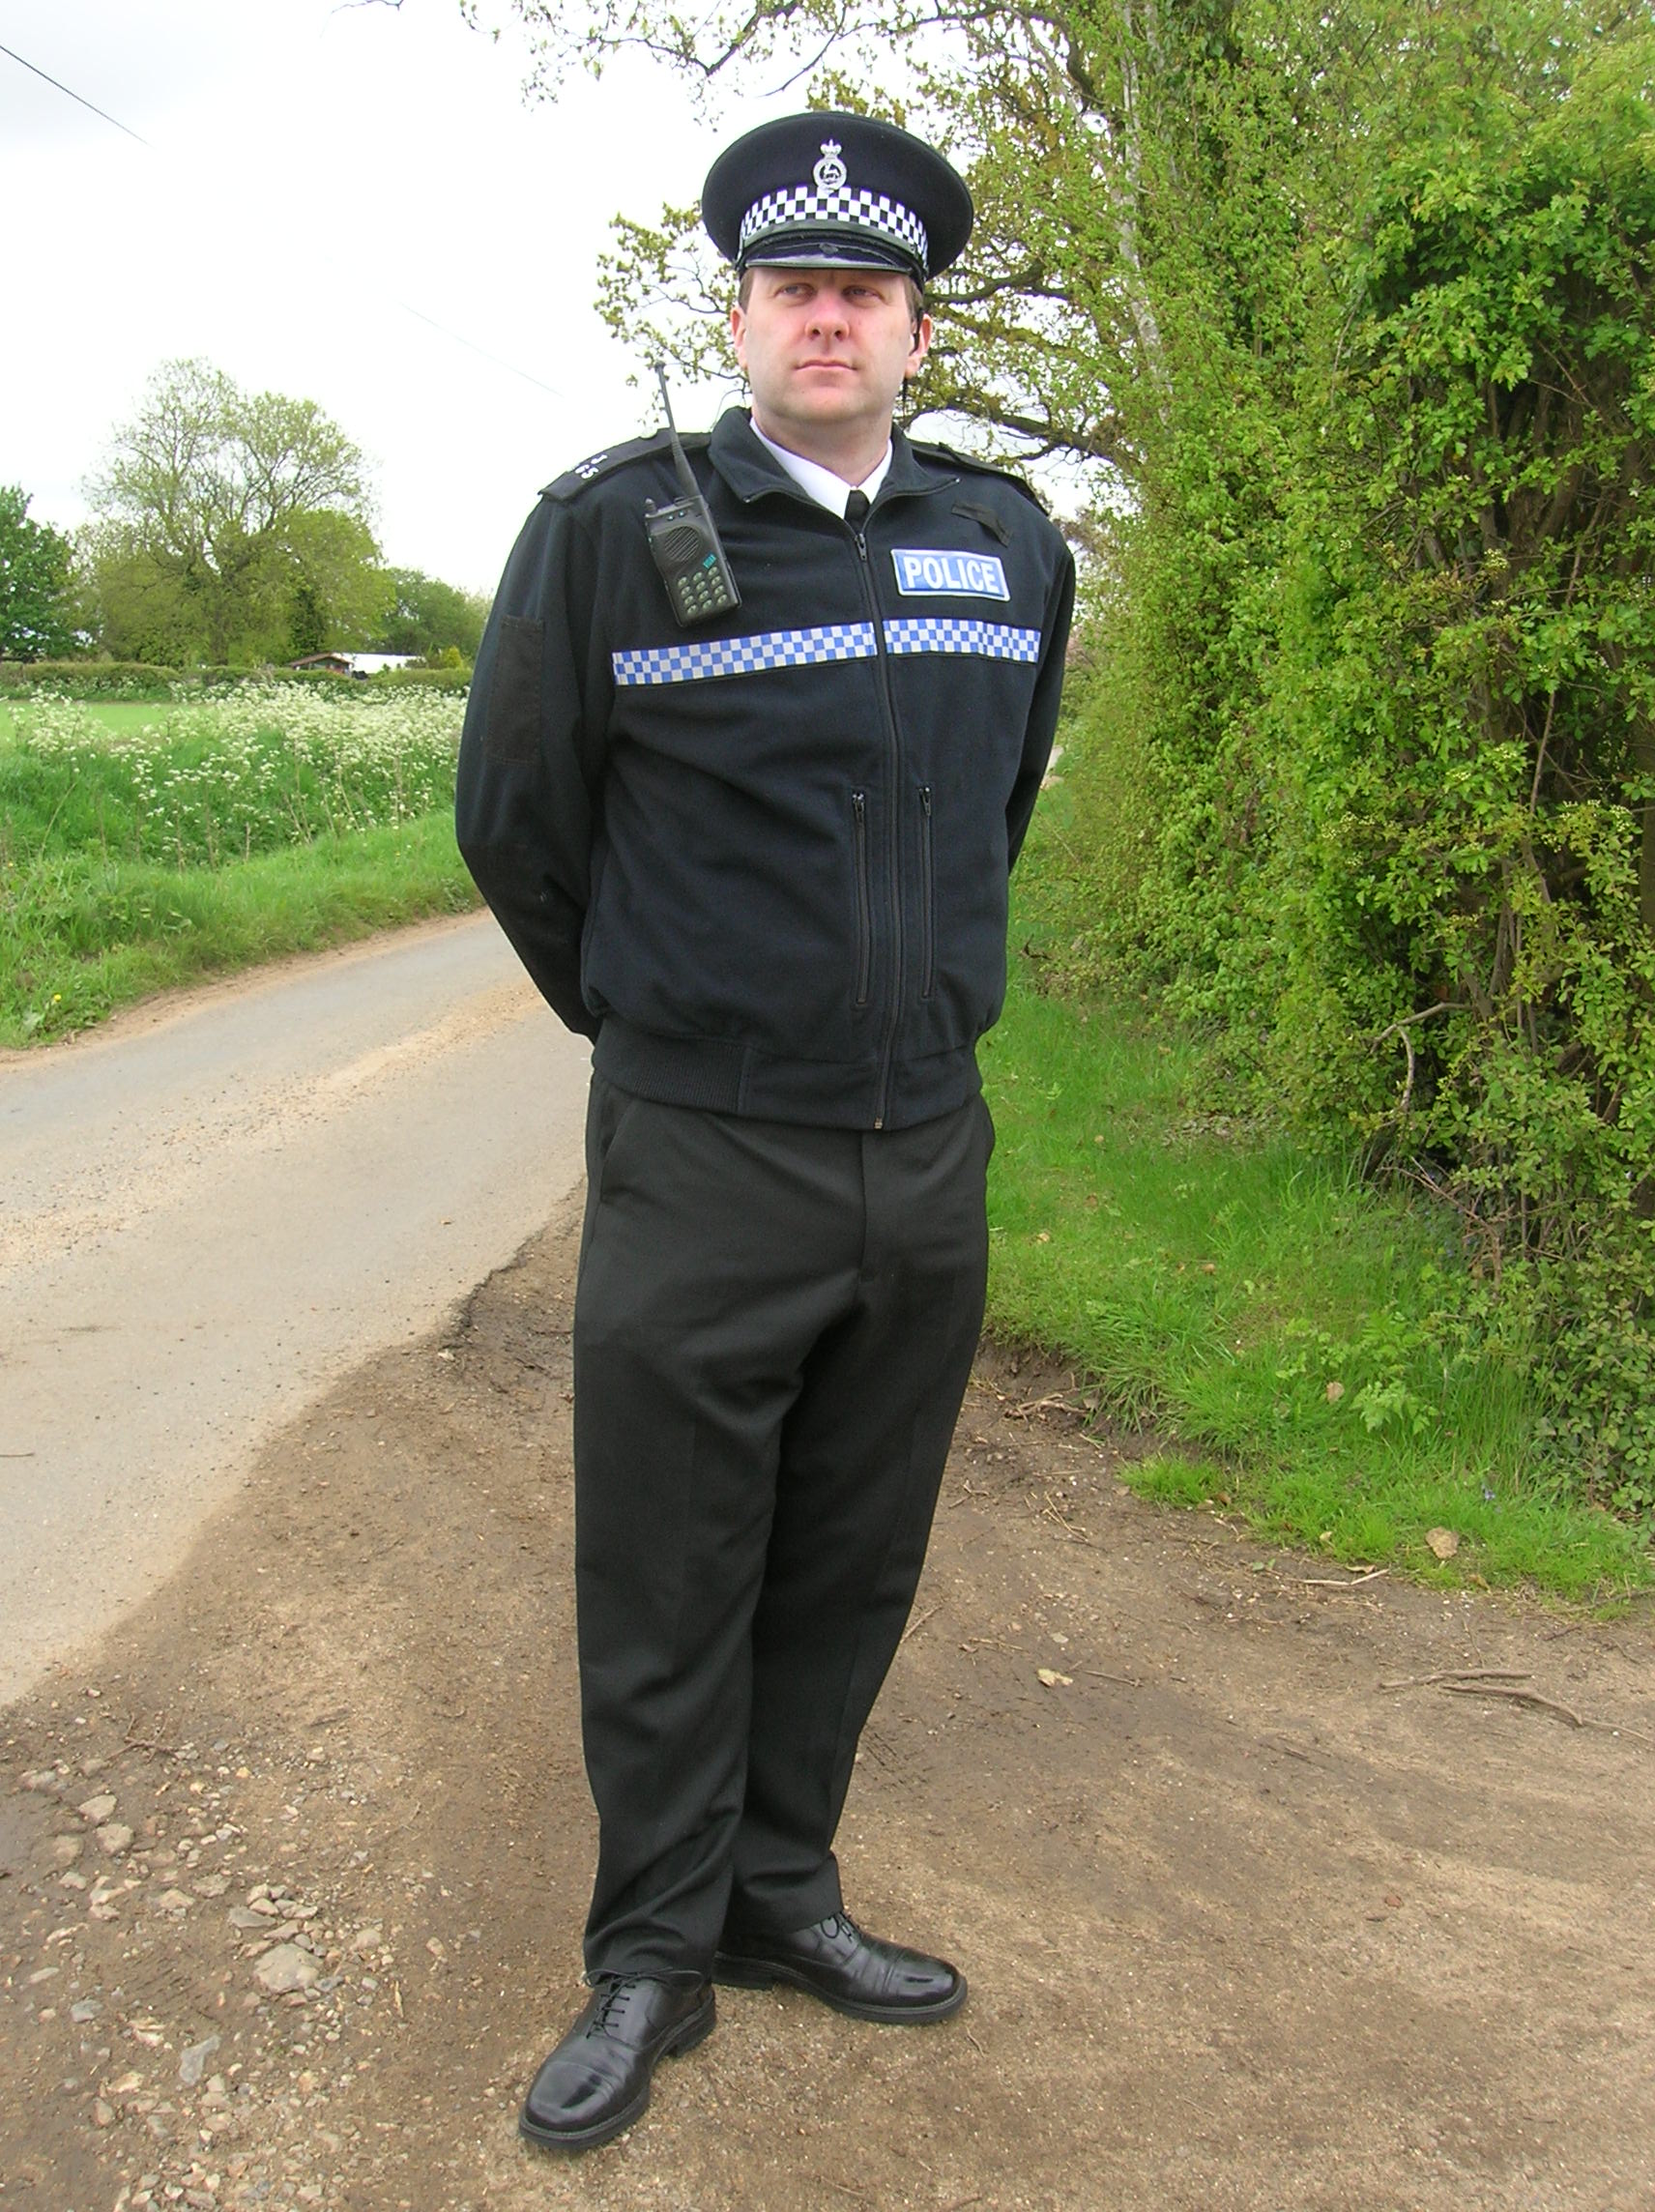 Police uniform, own costume.